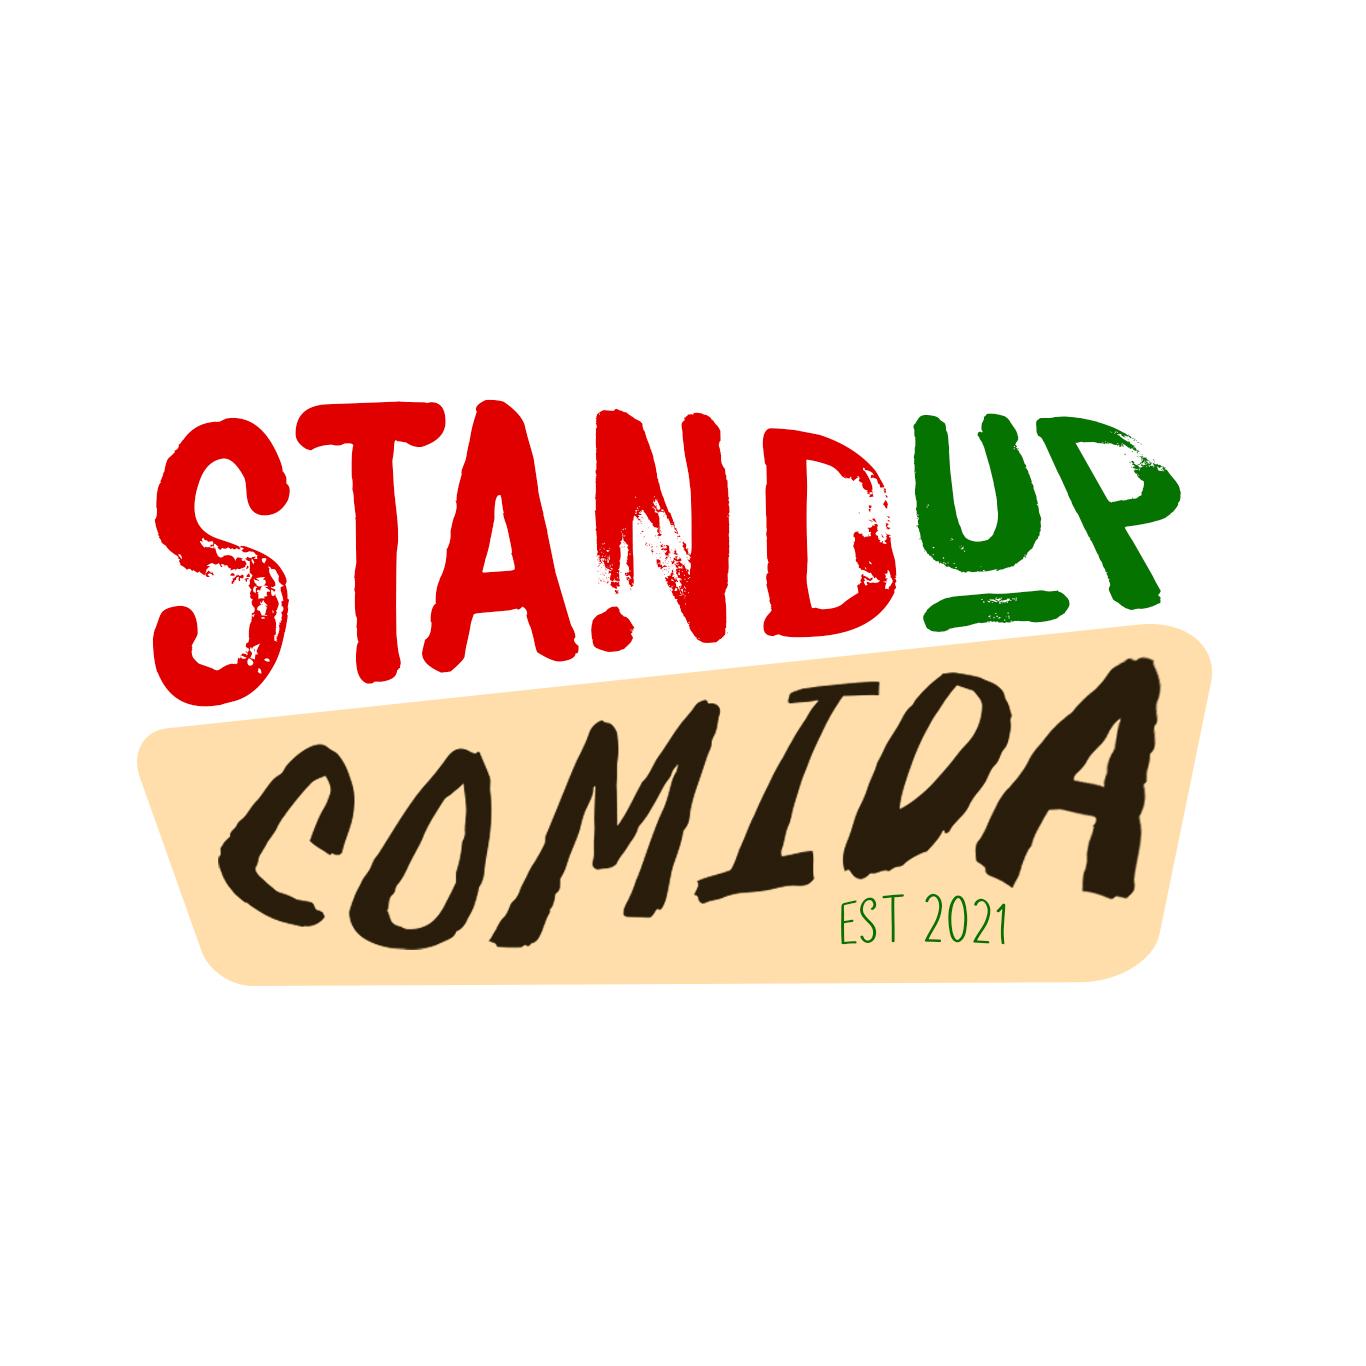 Stand Up Comida